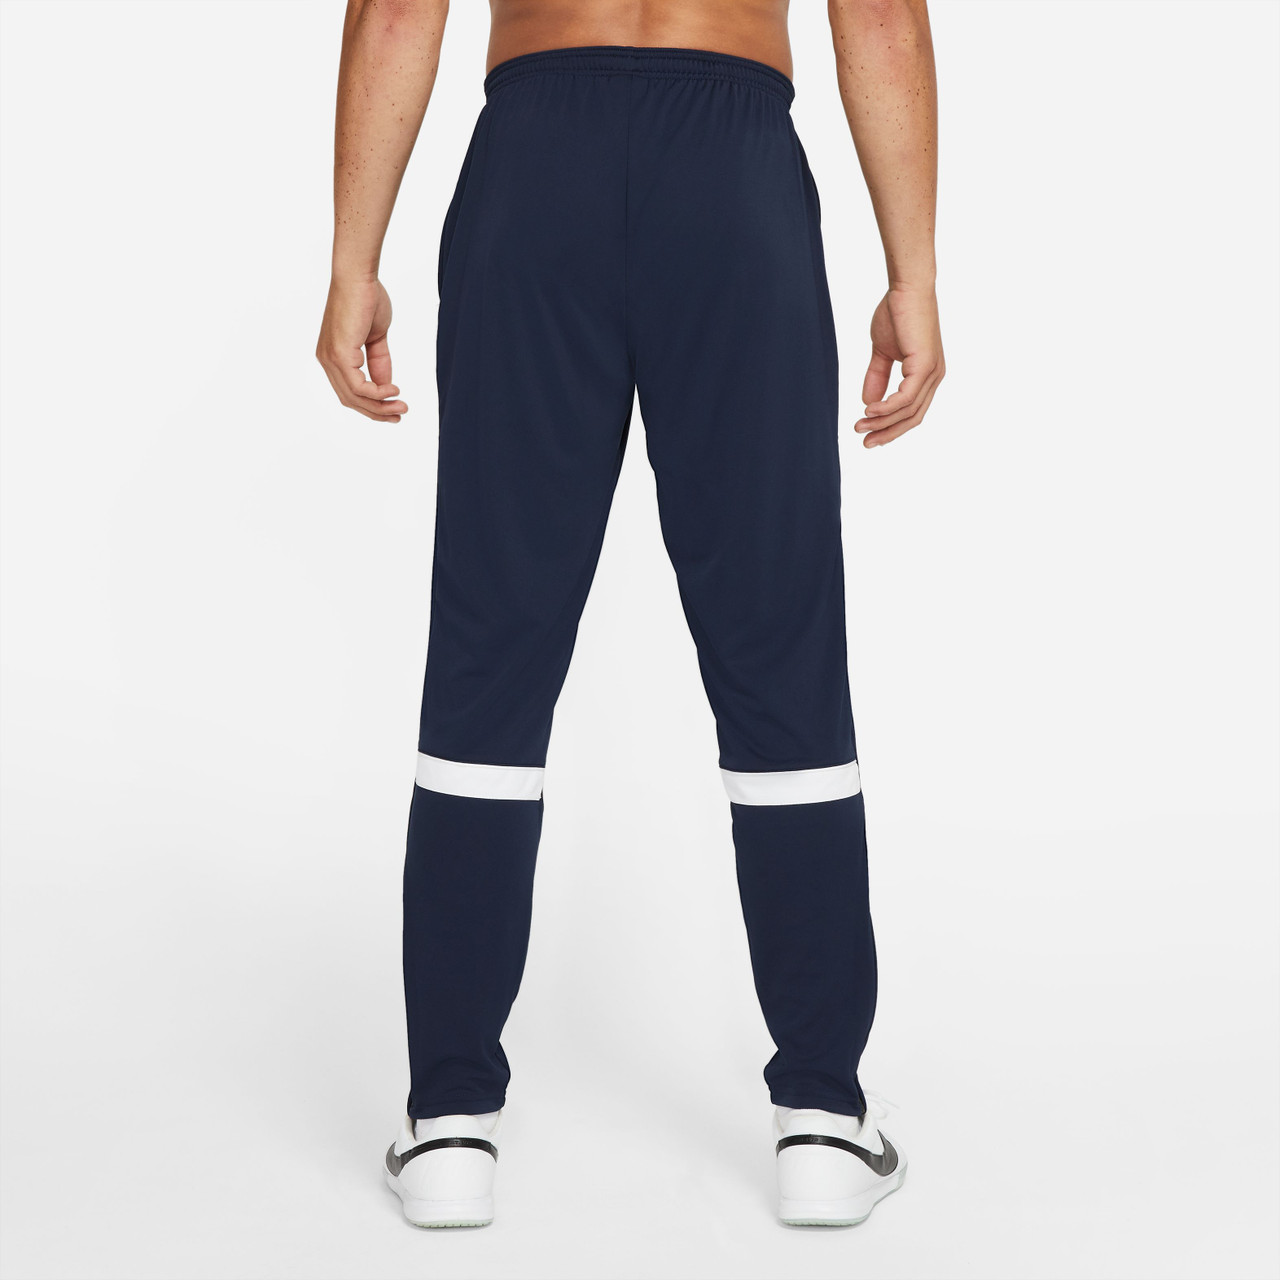 Nike Women's Dri-FIT Academy Pro Pant - DH9273-451 - Navy